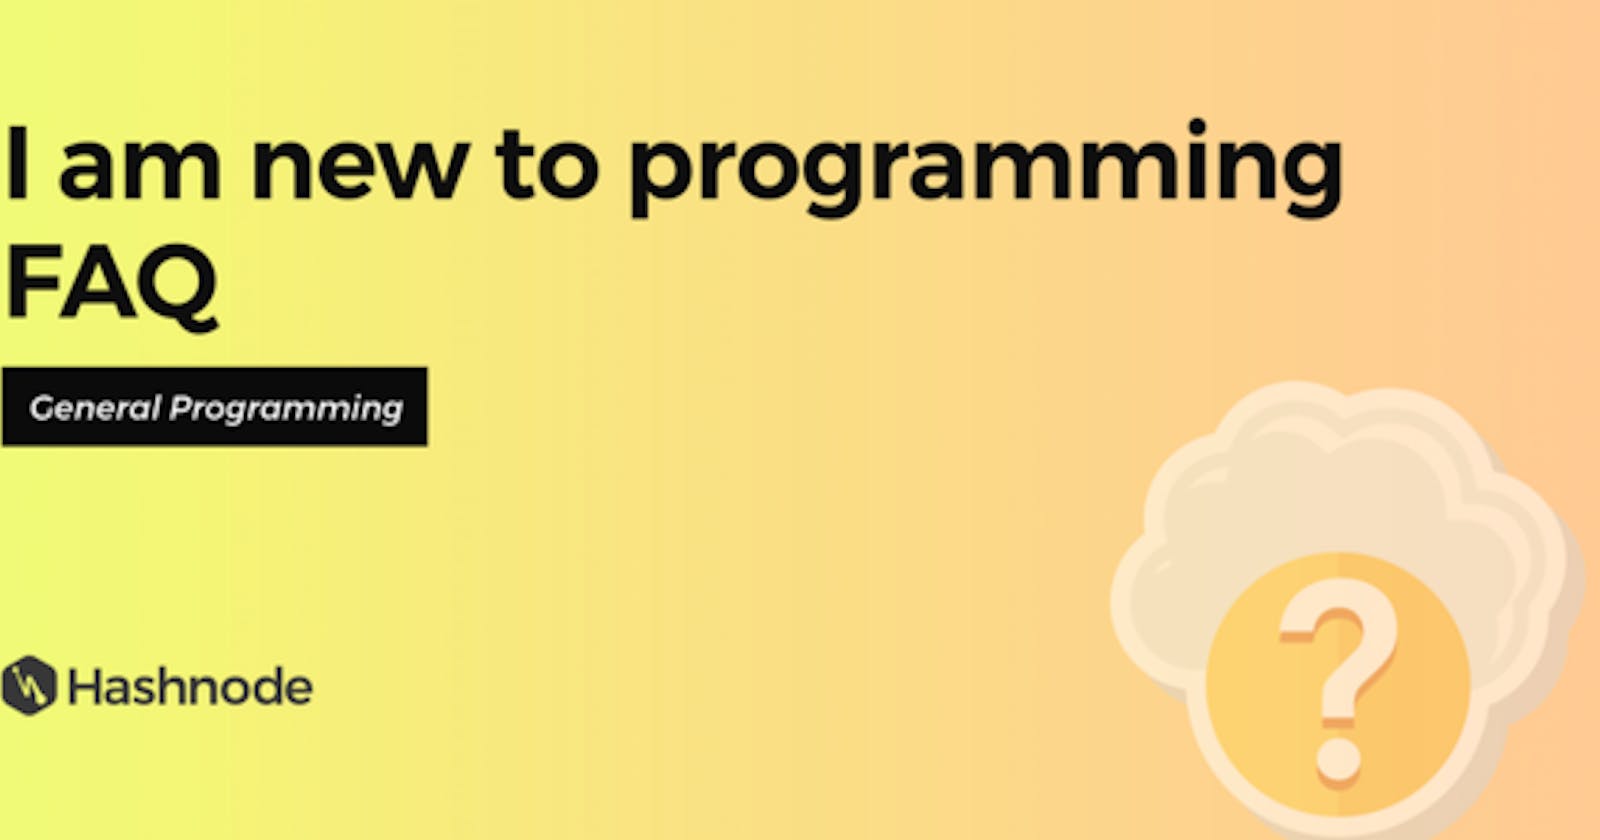 The "I Am New To Programming" FAQ